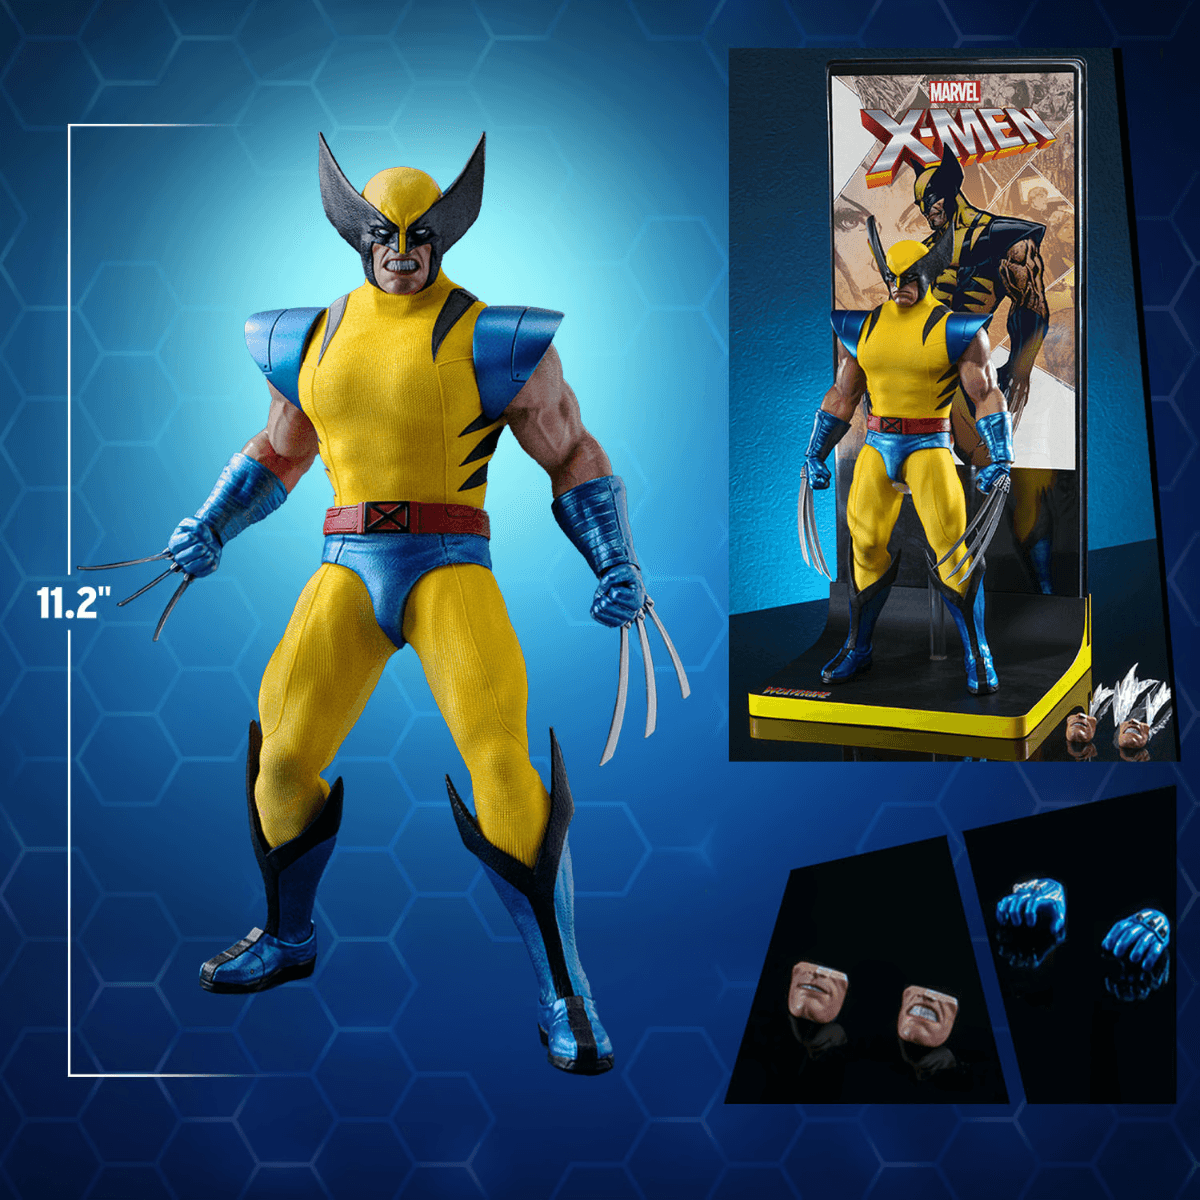 HOTHS01 X-Men - Wolverine by HONO STUDIO 1:6 Scale Figure - Hot Toys - Titan Pop Culture